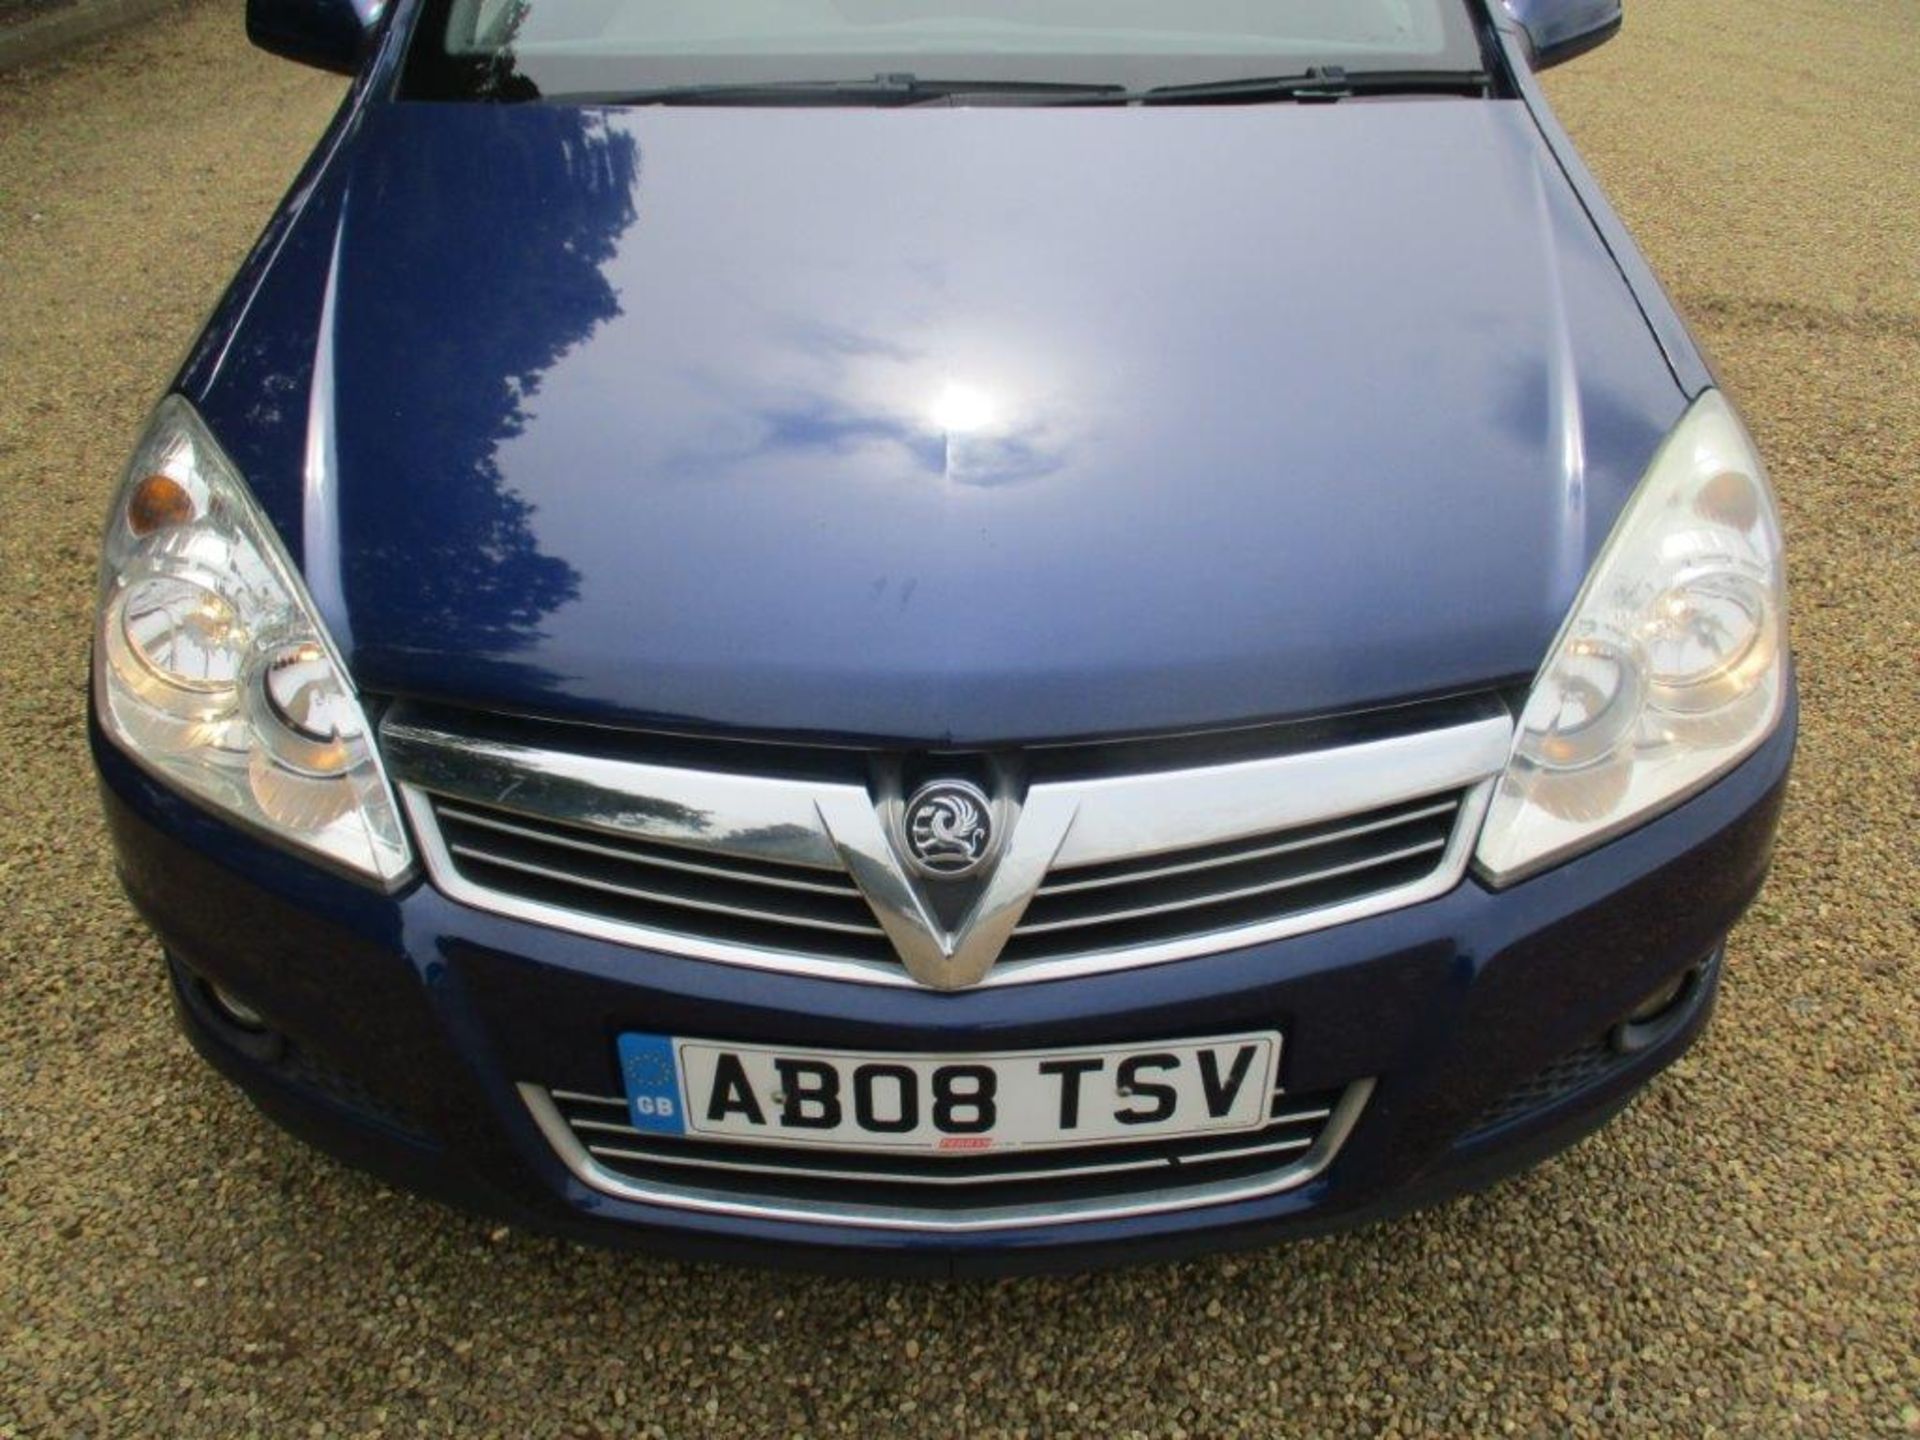 08 08 Vauxhall Astra Design - Image 6 of 19